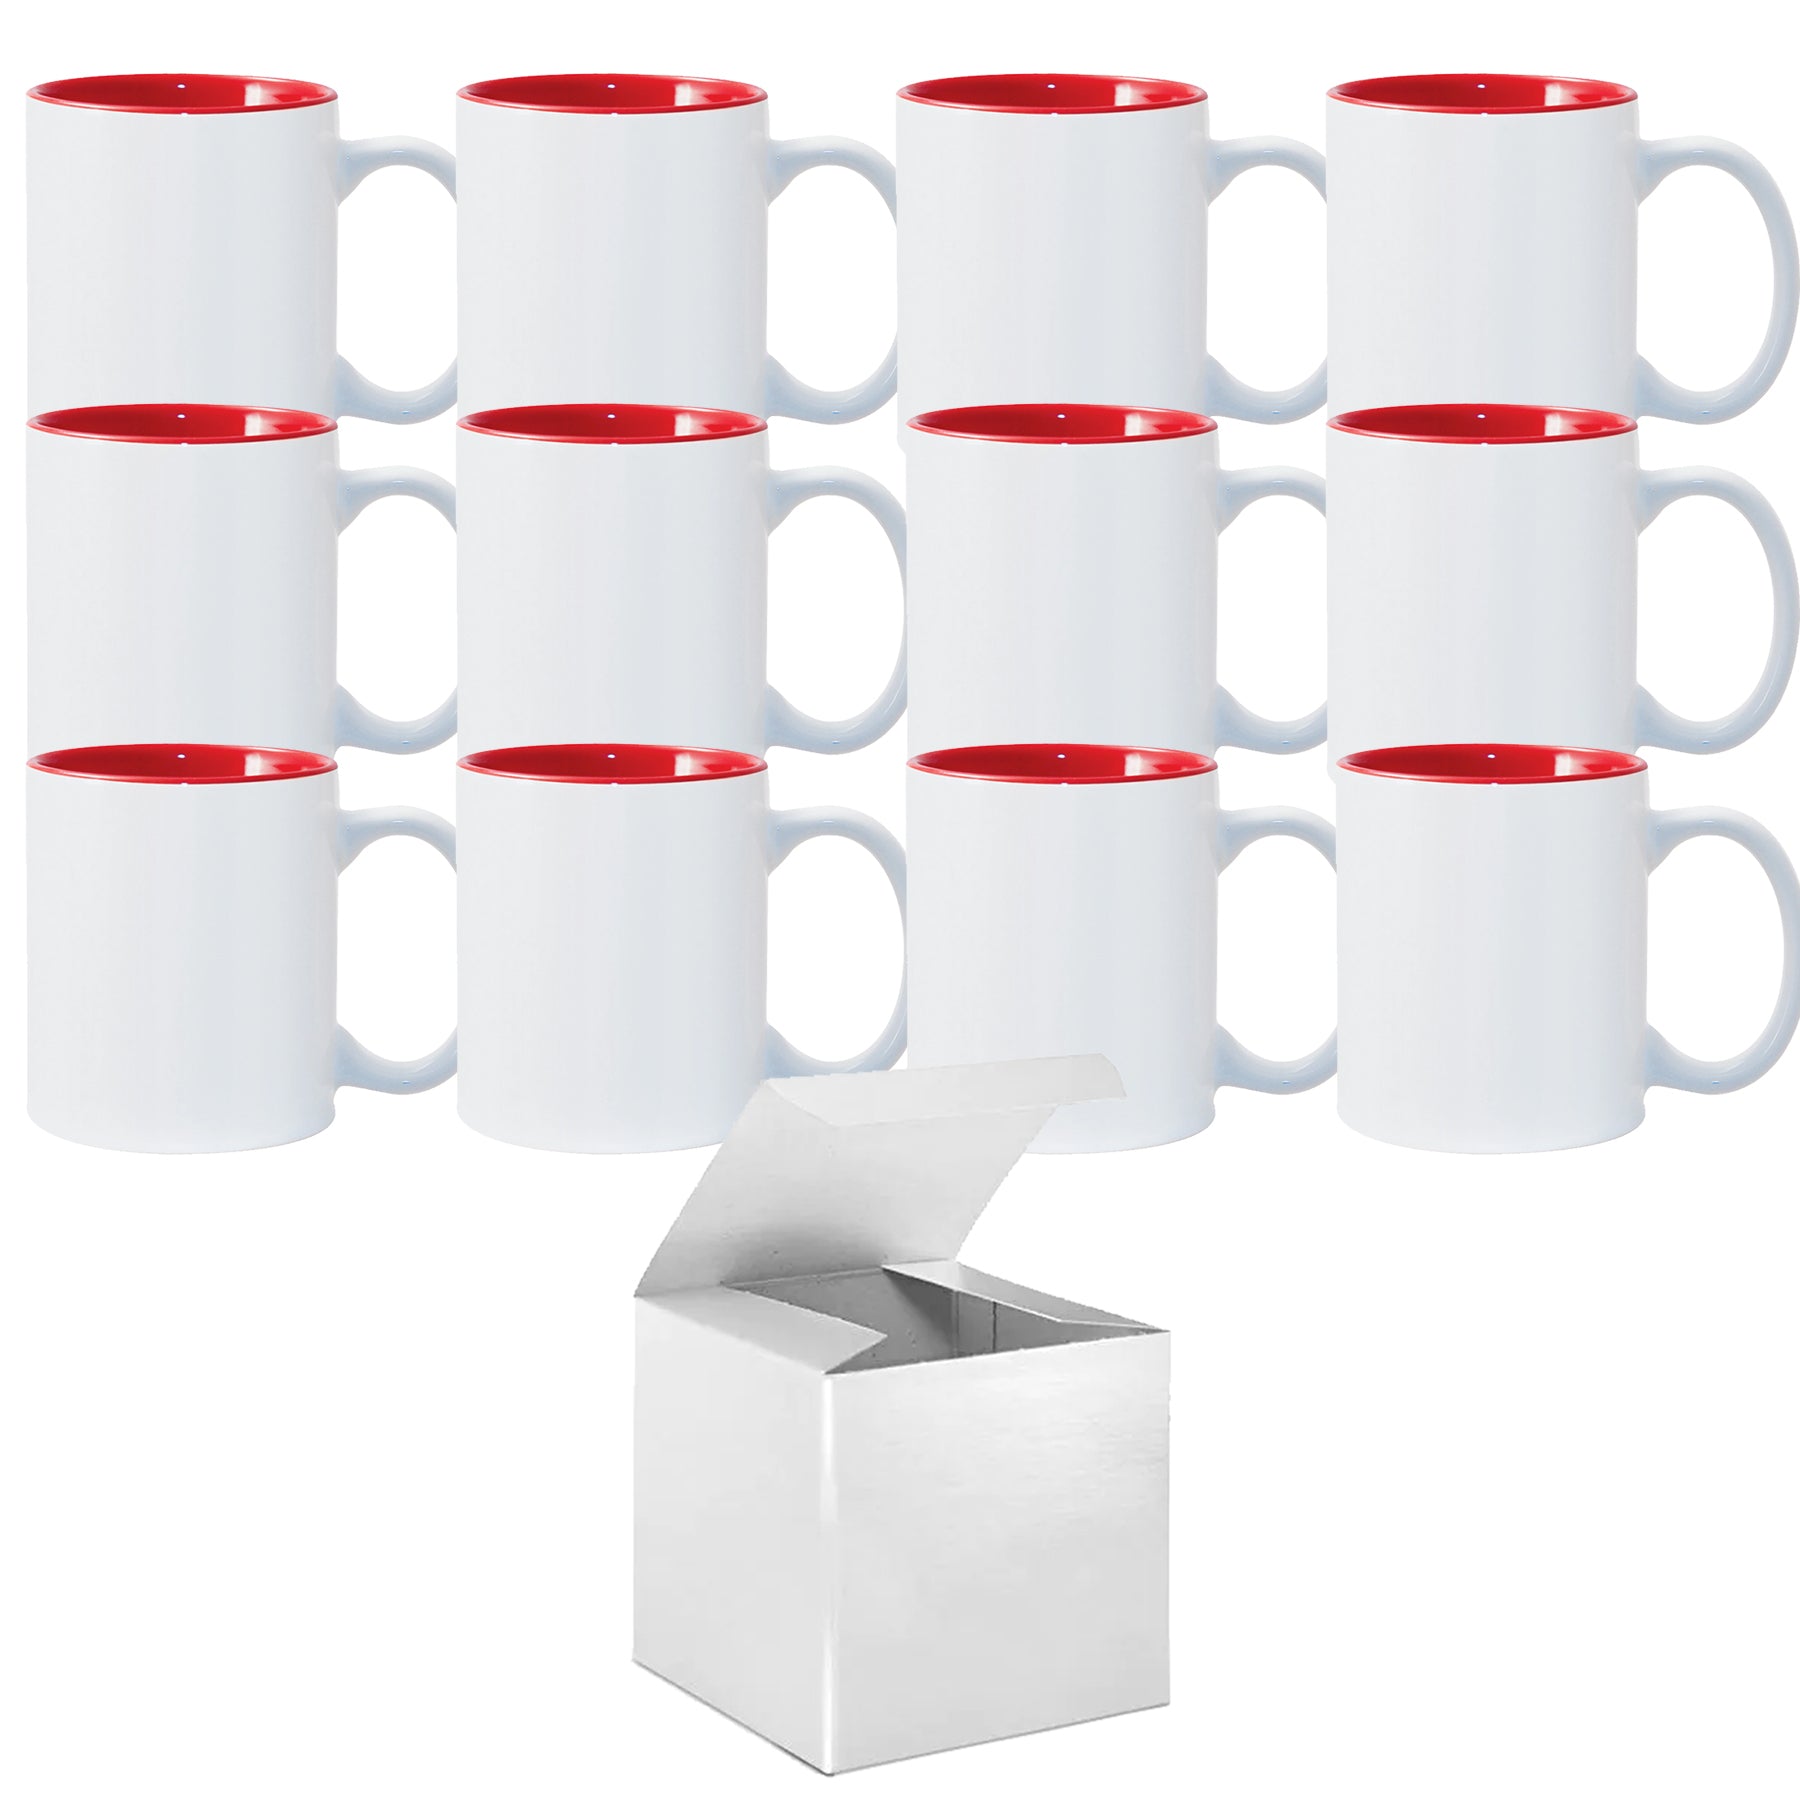 Sublimation 11 oz ceramic two tone color contrast coffee mug – We Sub'N